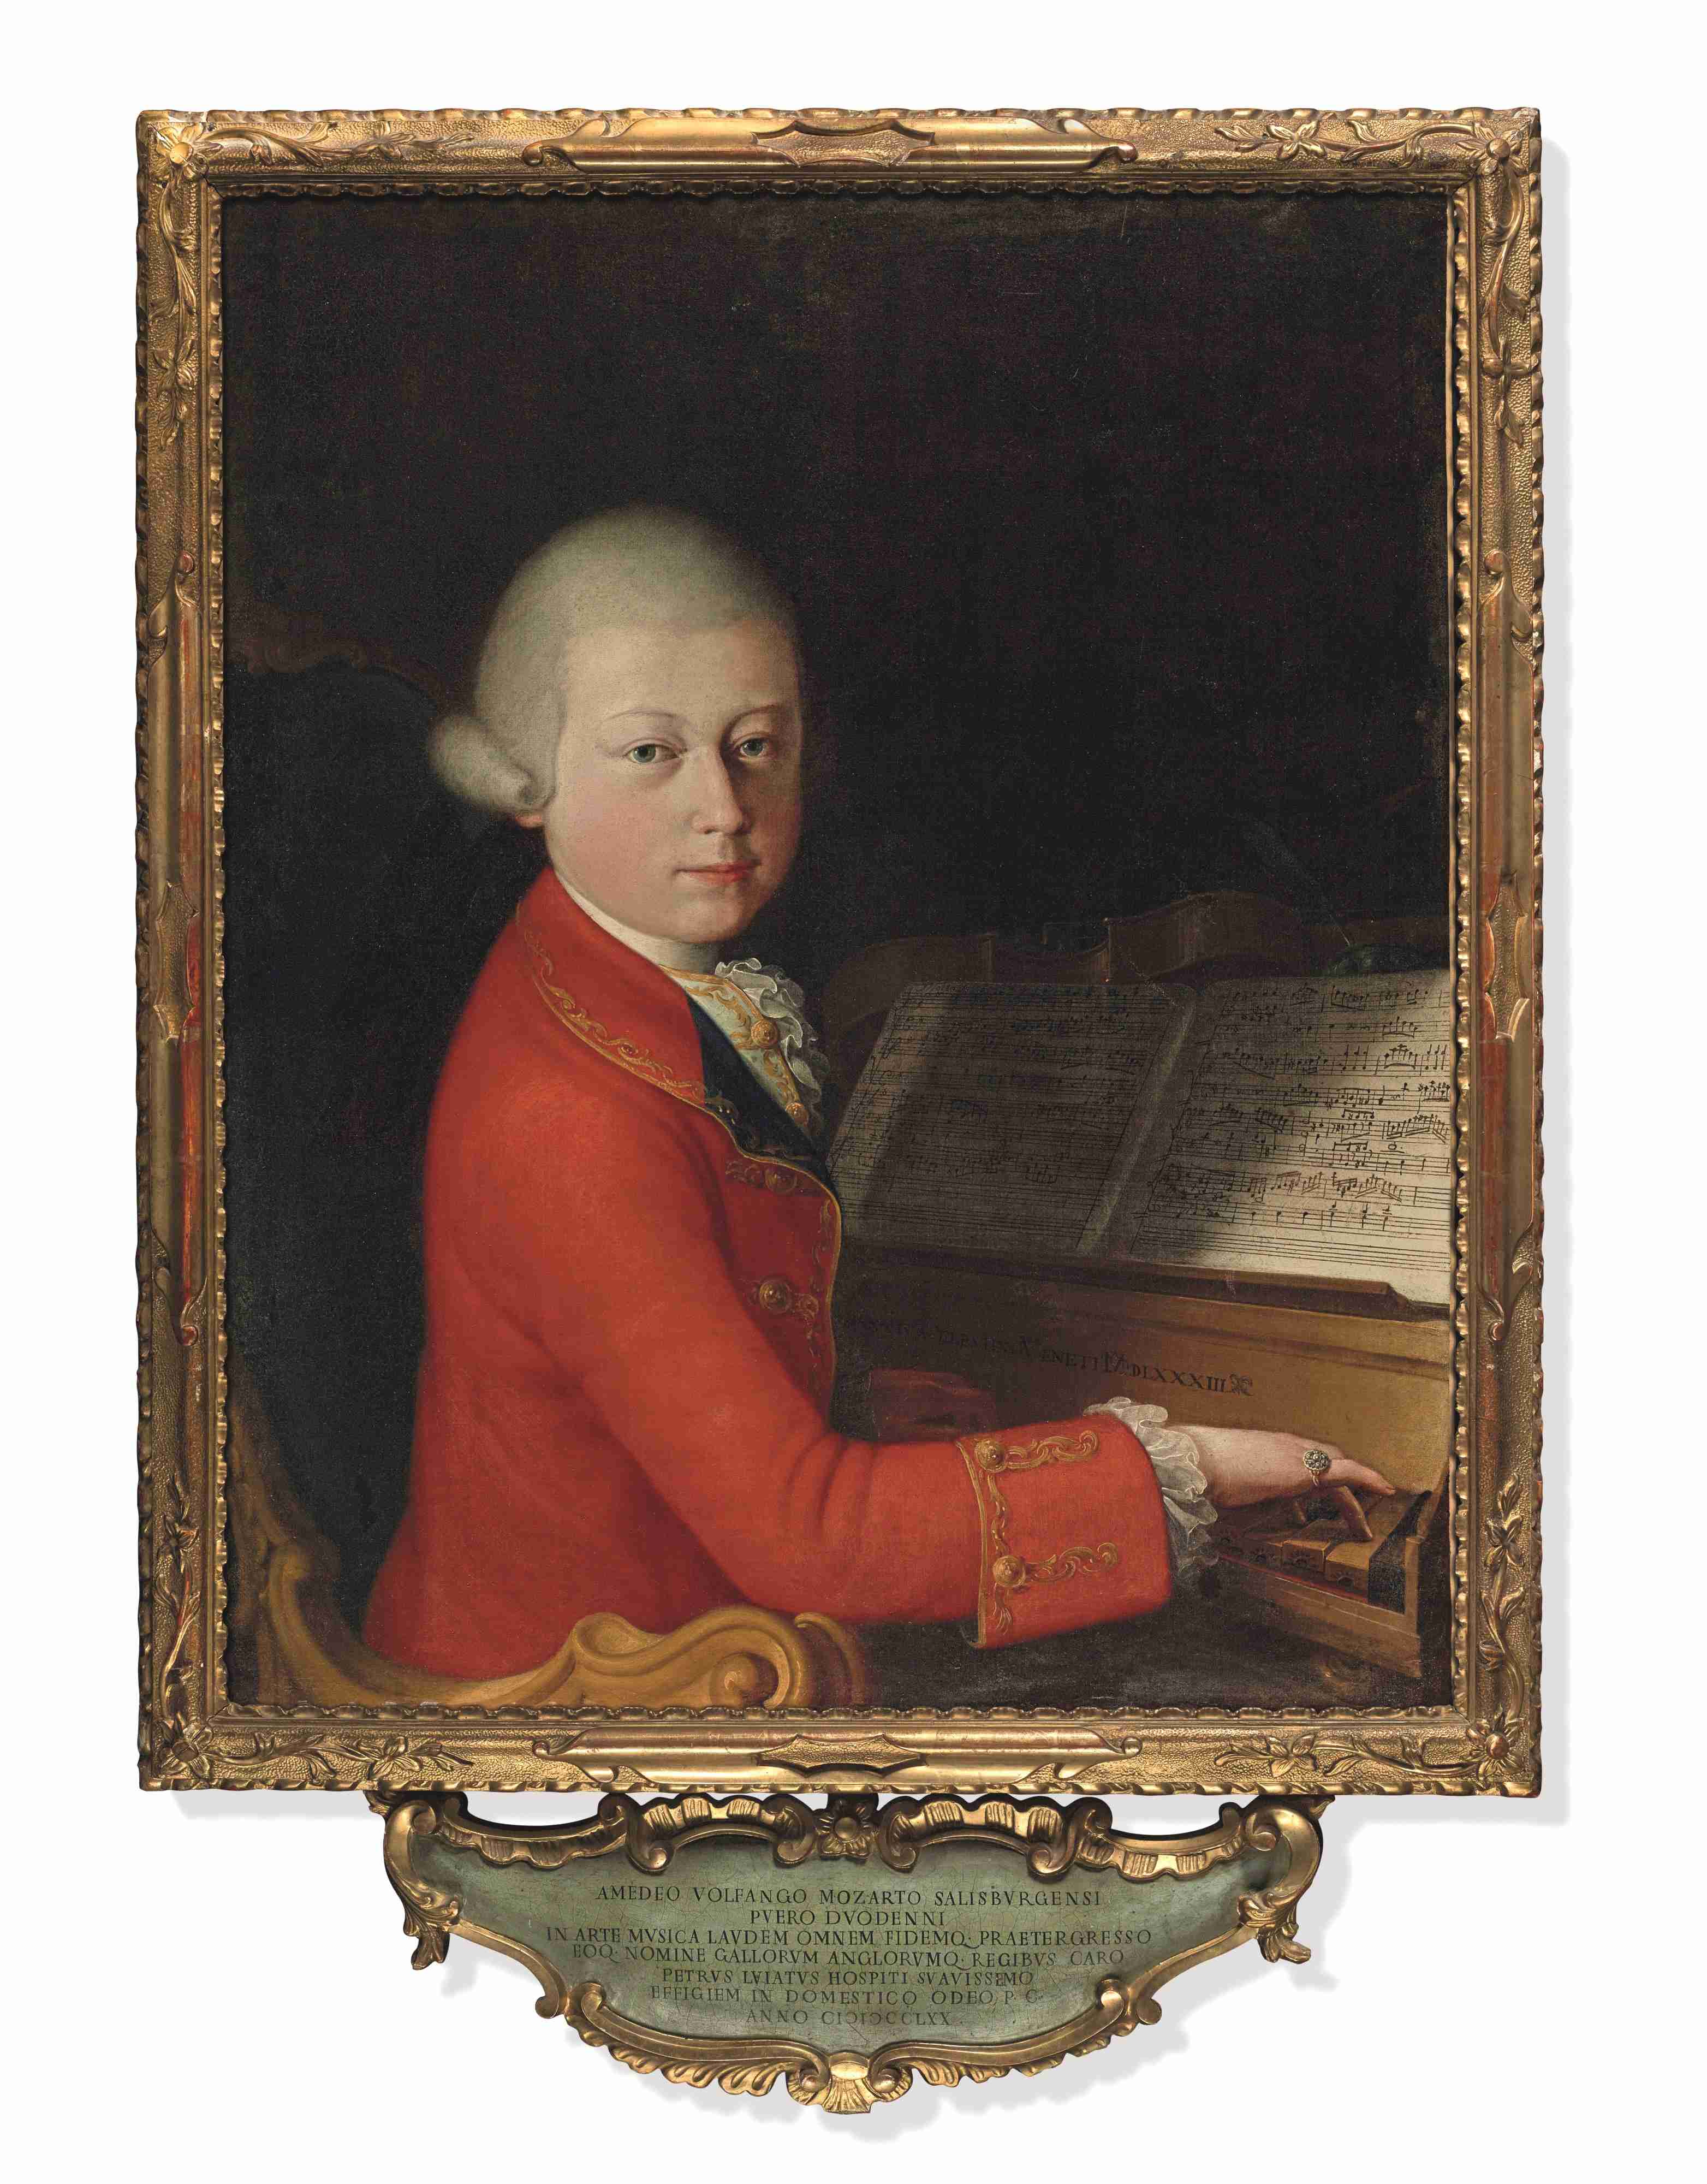 Cignaroli Mozart a Verona gennaio 1770